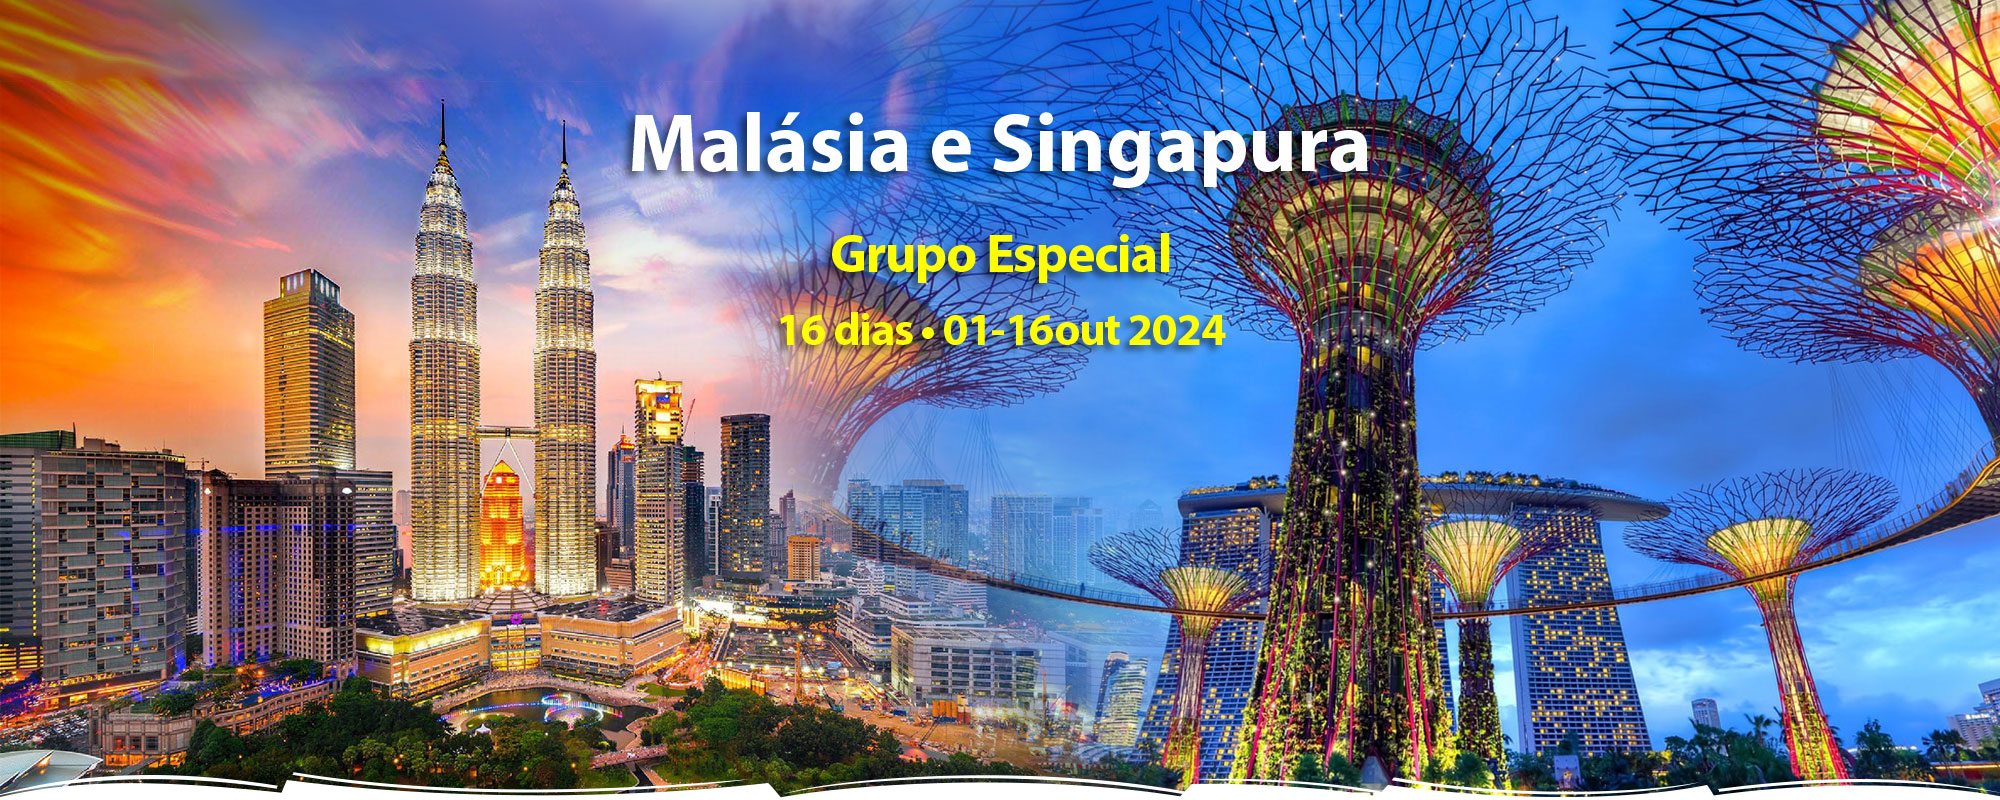 Malásia e Singapura Grupo Especial Scan-Suisse 2024